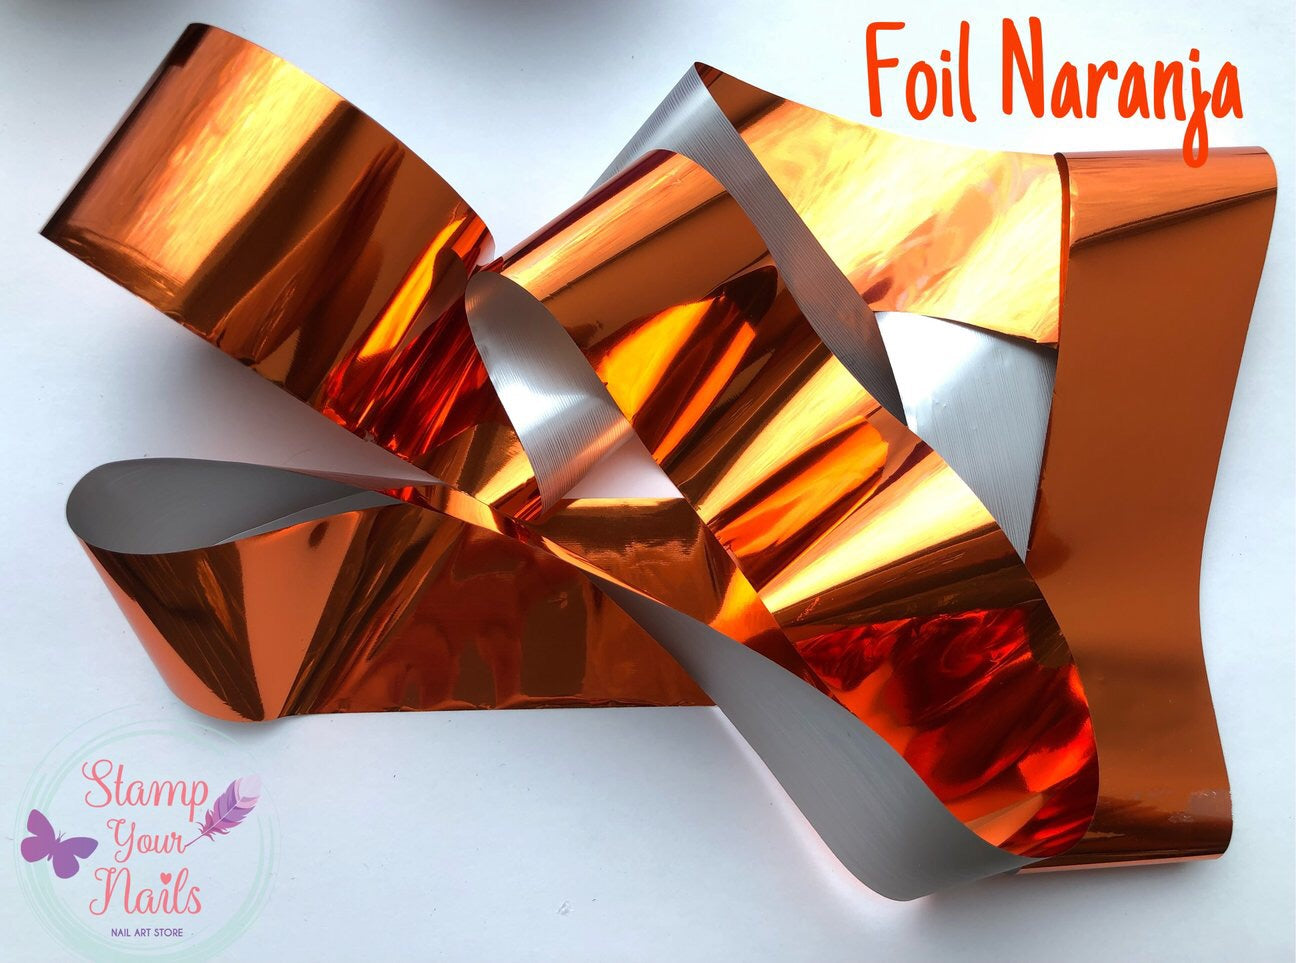 Foil naranja - Stamp your nails